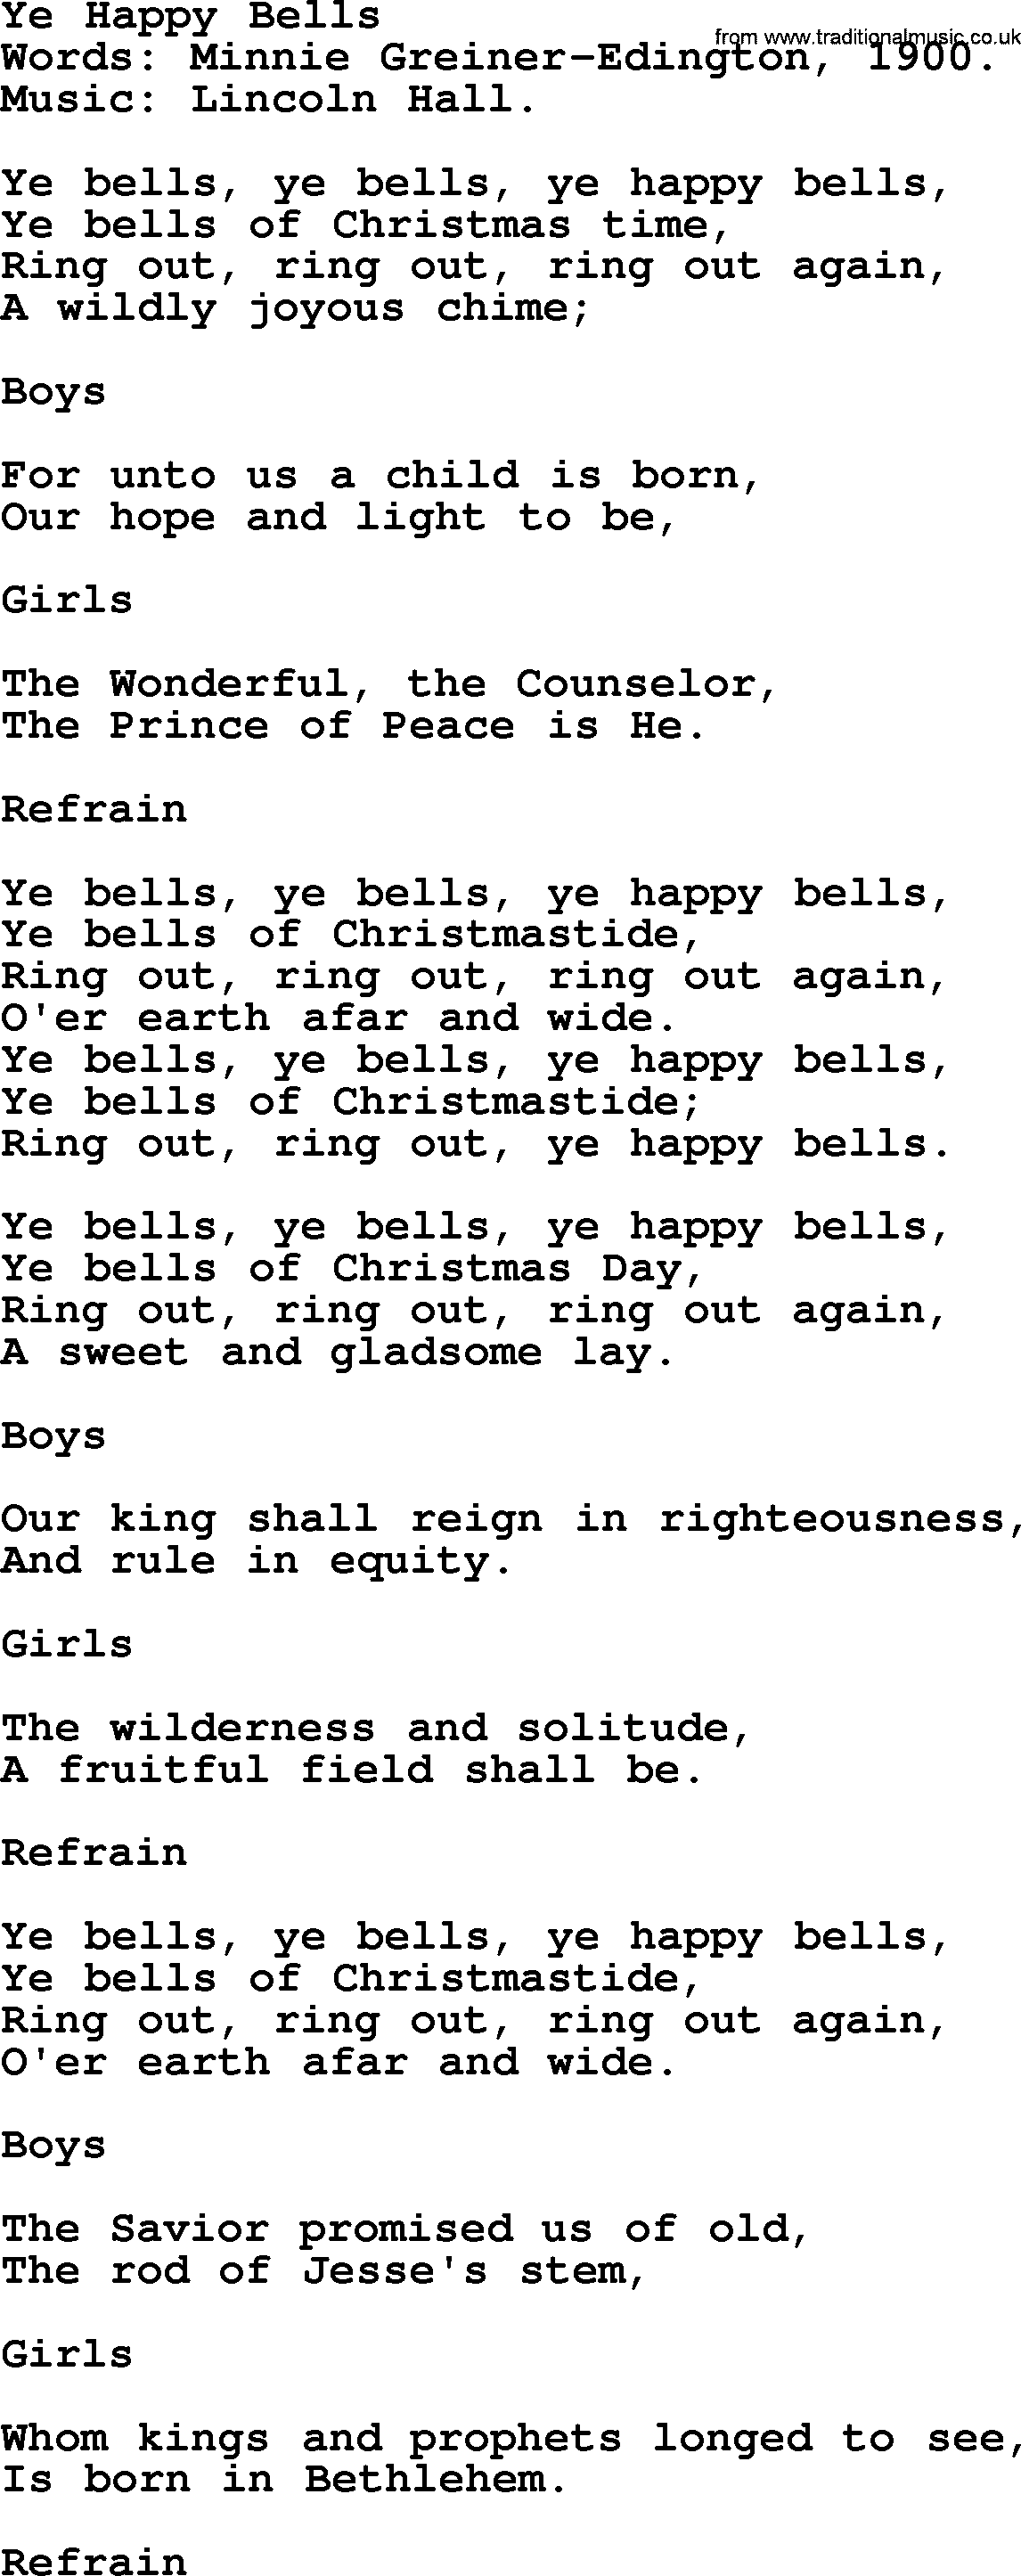 Christmas Hymns, Carols and Songs, title: Ye Happy Bells, lyrics with PDF